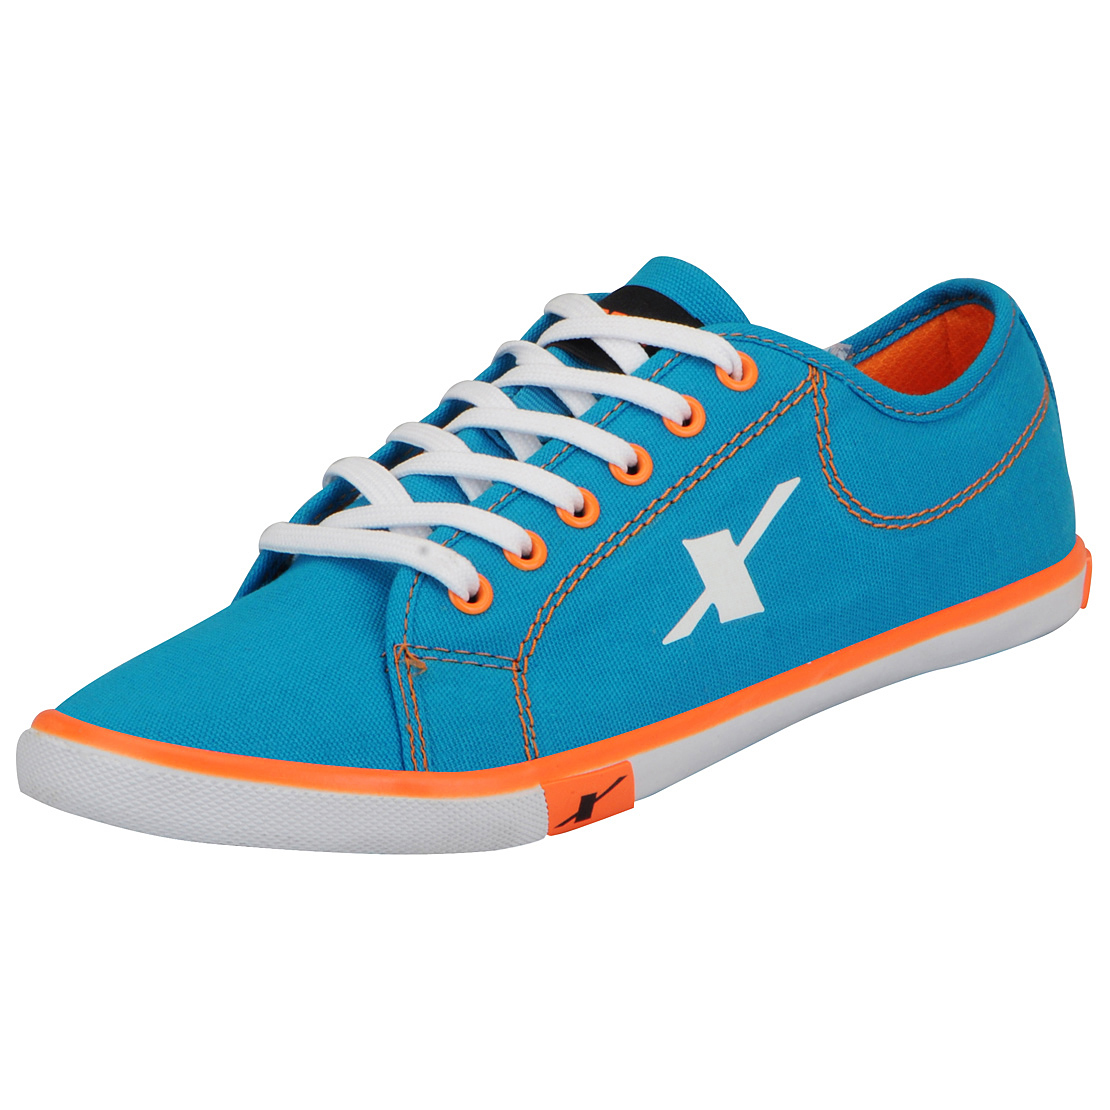 Buy Sparx Blue Orange Men's Canvas Sneakers Online @ ₹889 from ShopClues